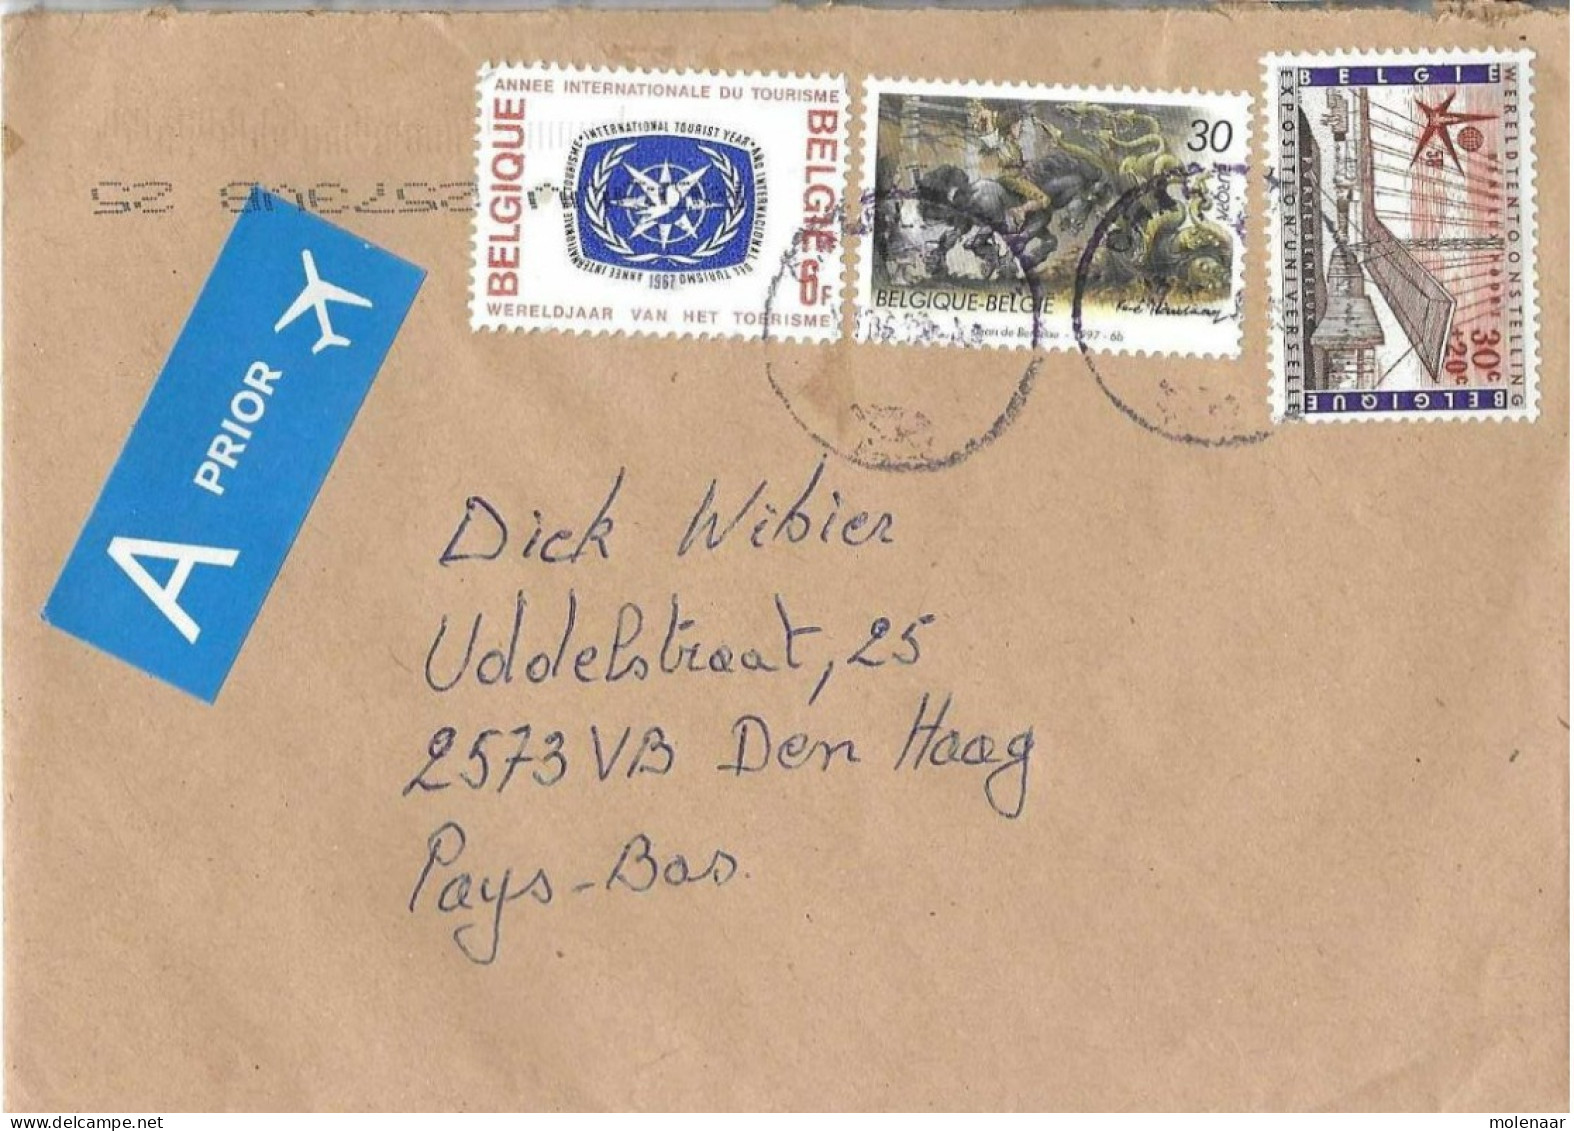 Postzegels > Europa > België > 1951-... > 1971-1980 > Brief Met 3 Postzegels (17020) - Lettres & Documents